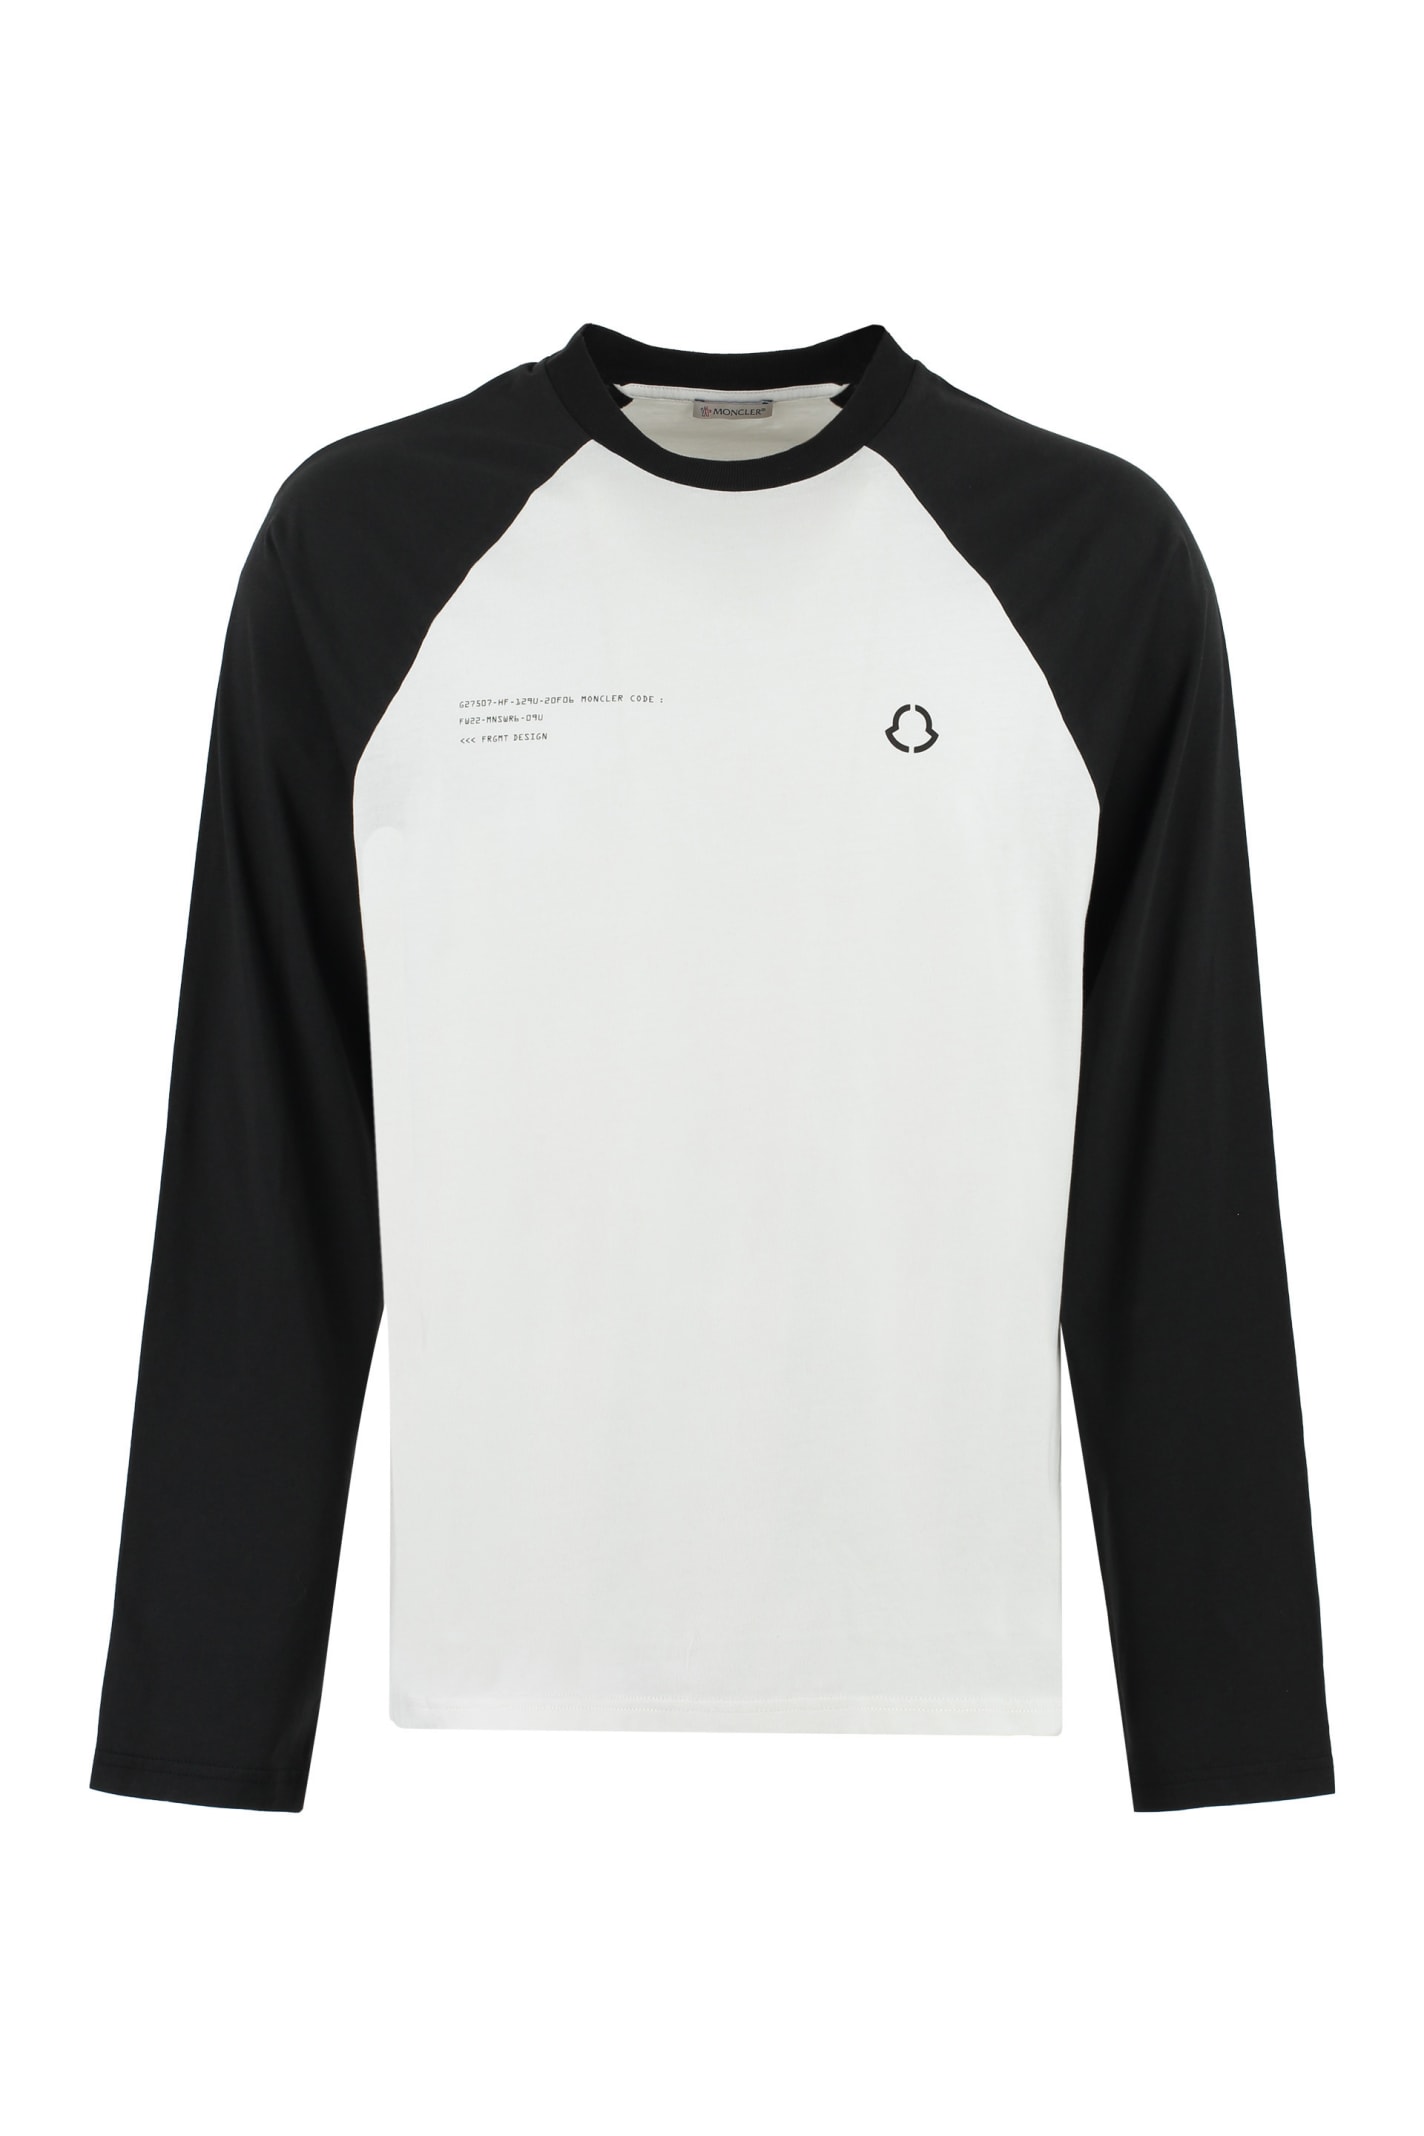 Moncler Genius 7 Moncler Frgmt Hiroshi Fujiwara - Ls Raglan Cotton Crew-neck T-shirt